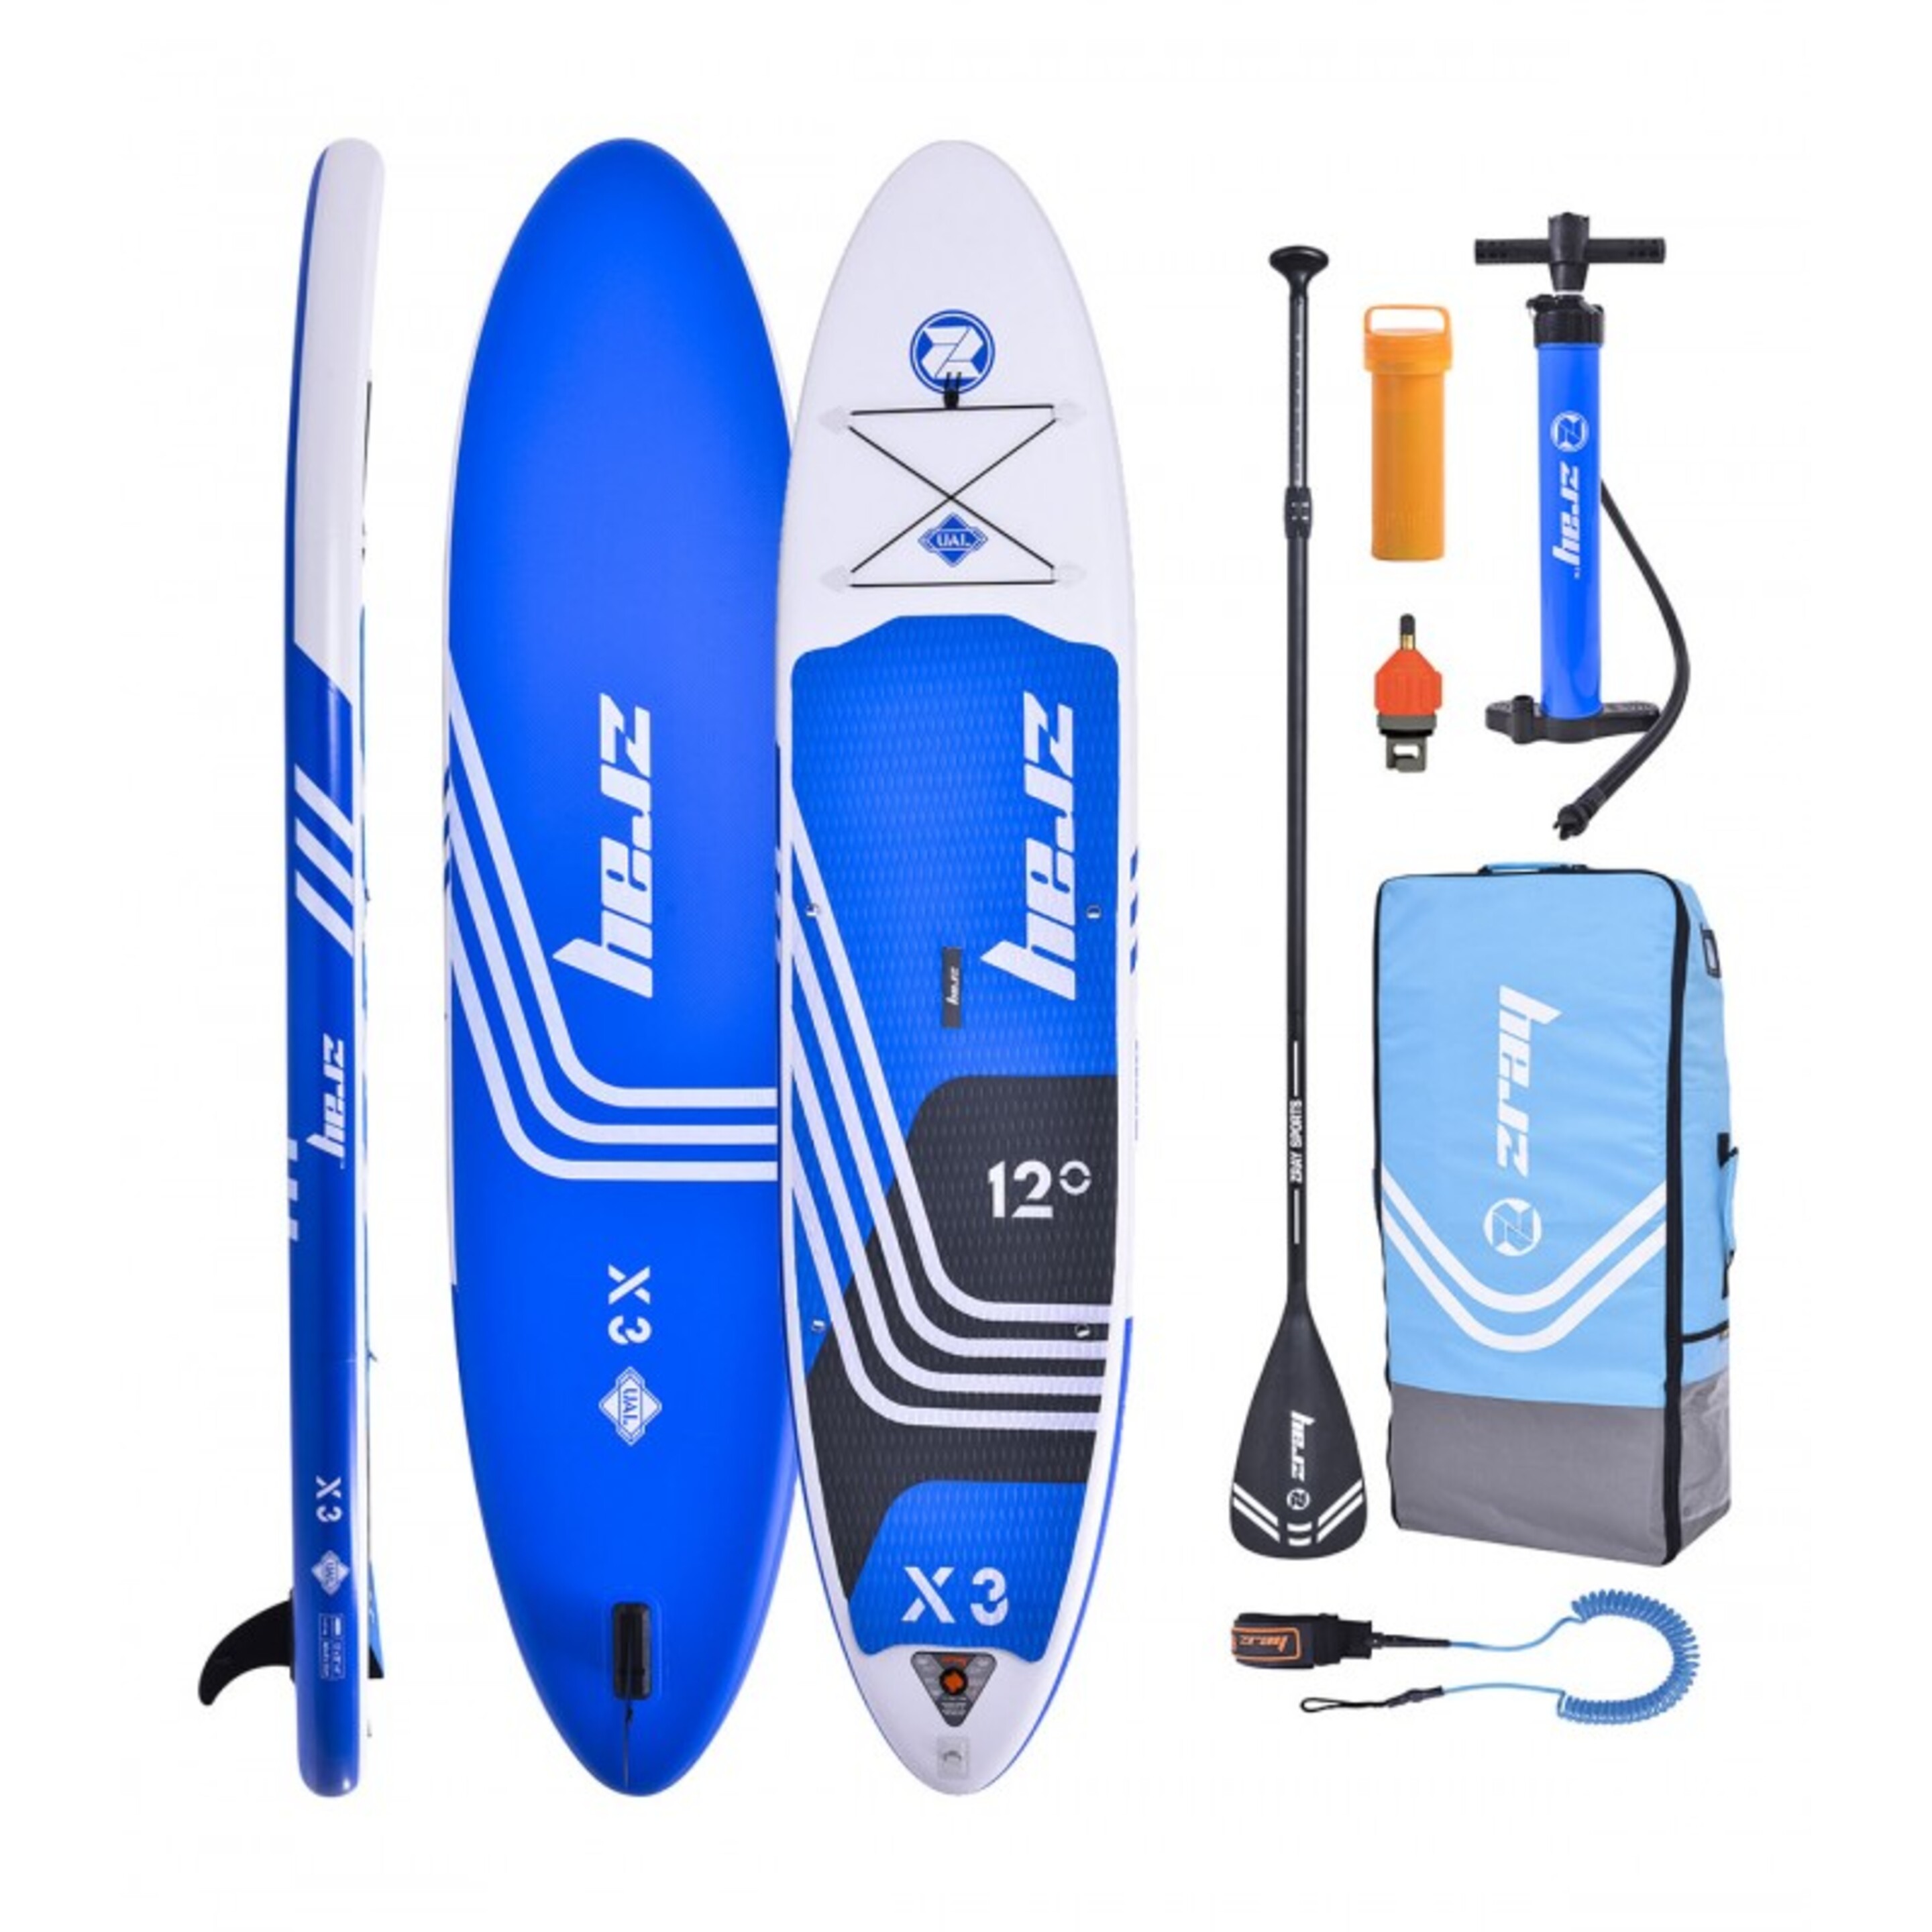 Tabla Paddle Surf Hinchable Zray X-rider X3 12,0 - azul-blanco - 